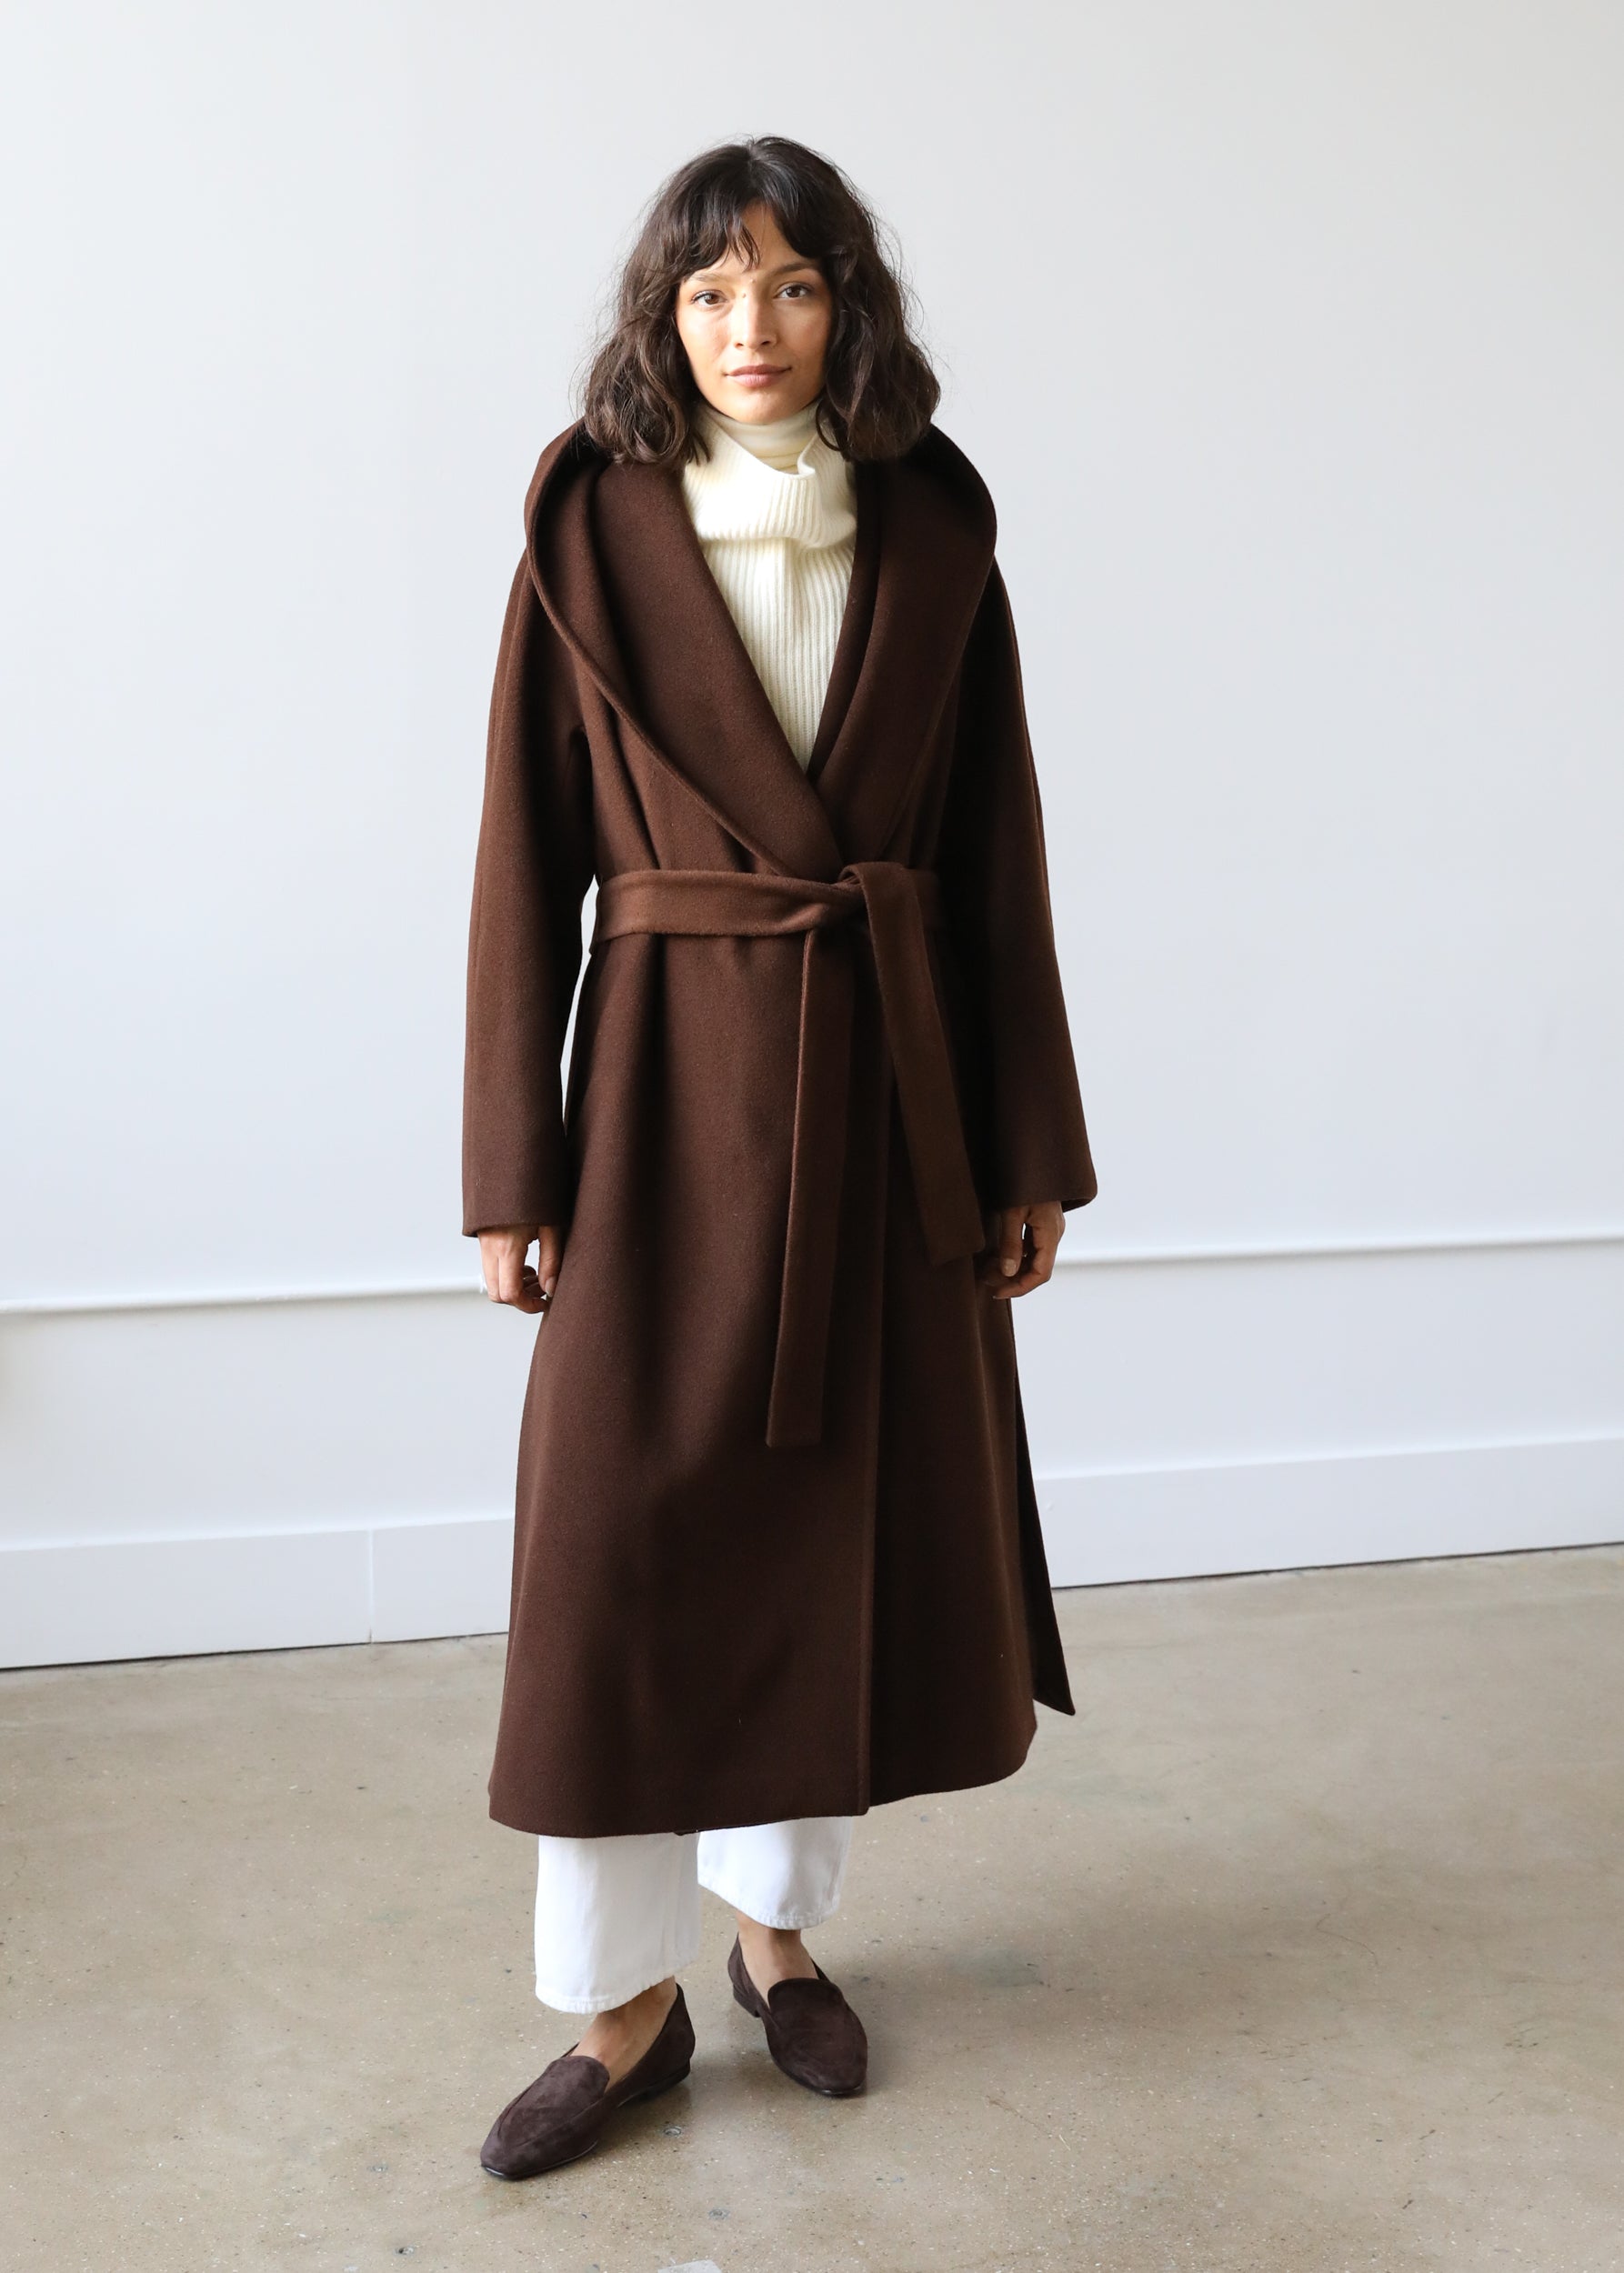 Estella | Goff Hooded Wrap Coat in Mocha Brown Virgin Wool Small